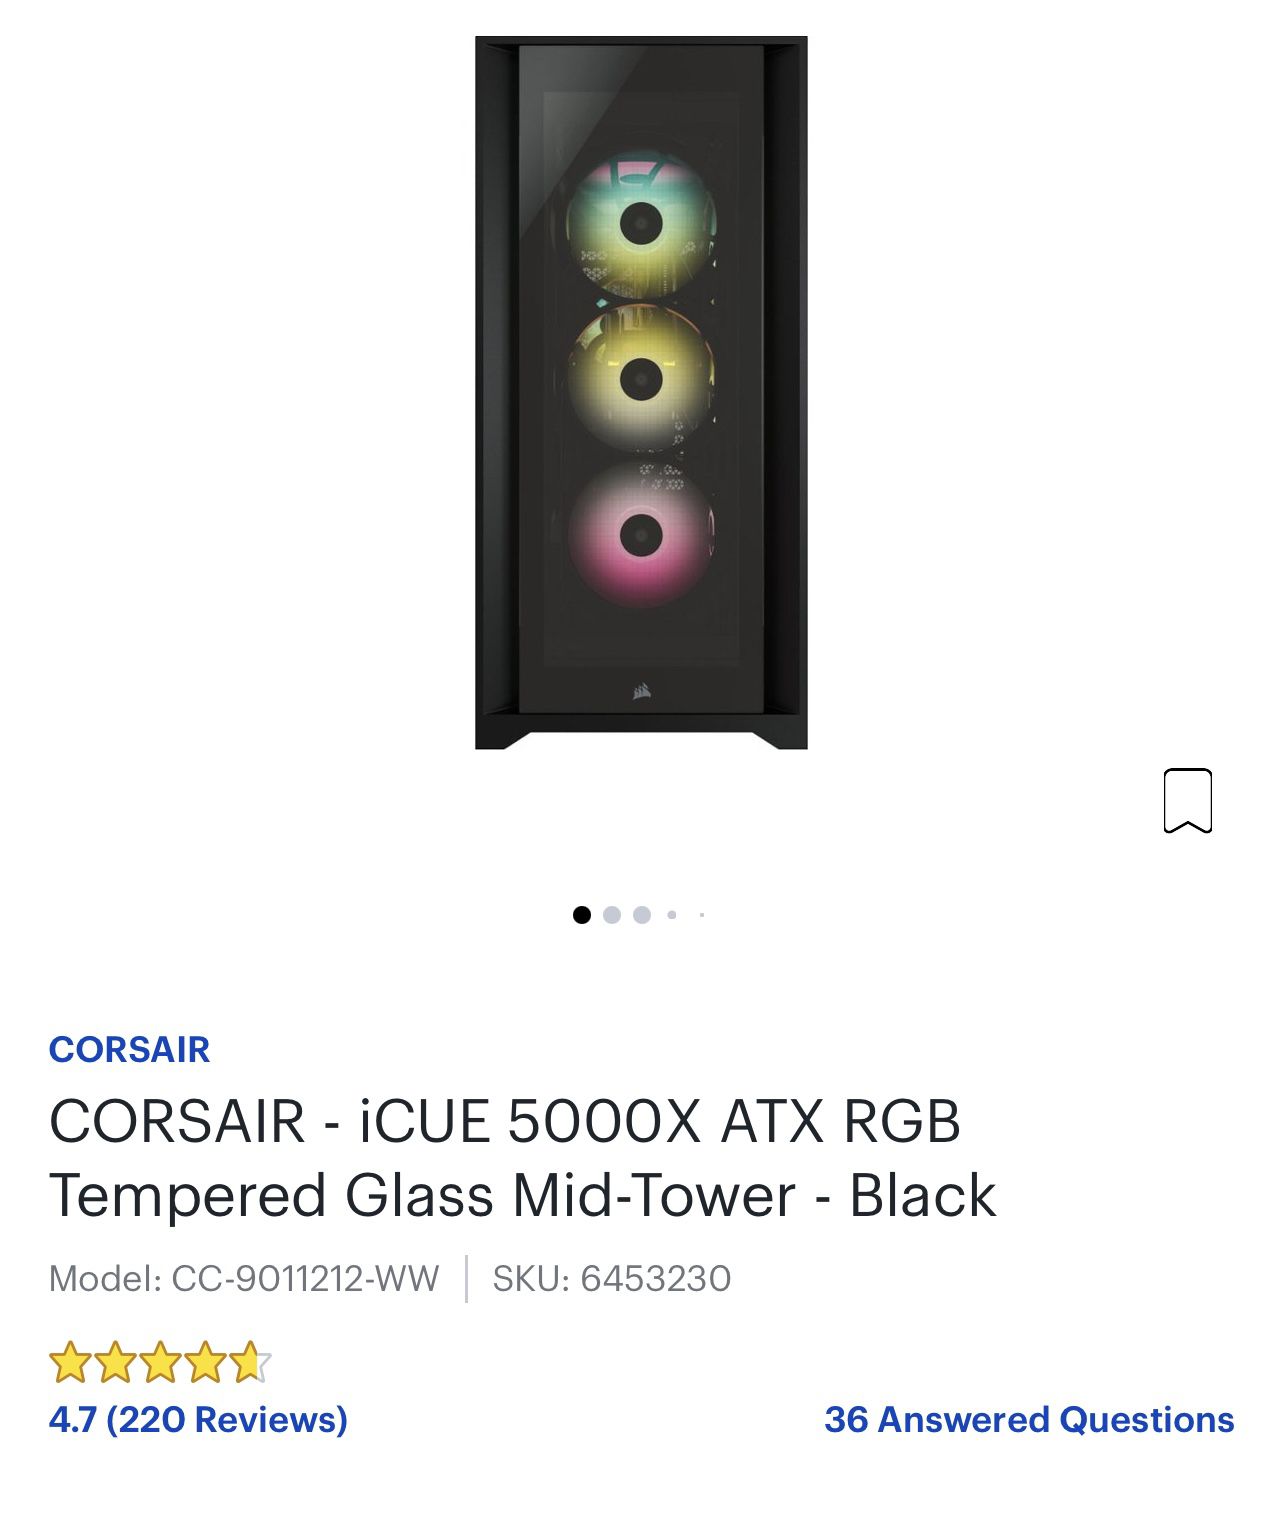 CORSAIR - iCUE 5000X ATX RGB Tempered Glass Mid-Tower - Black